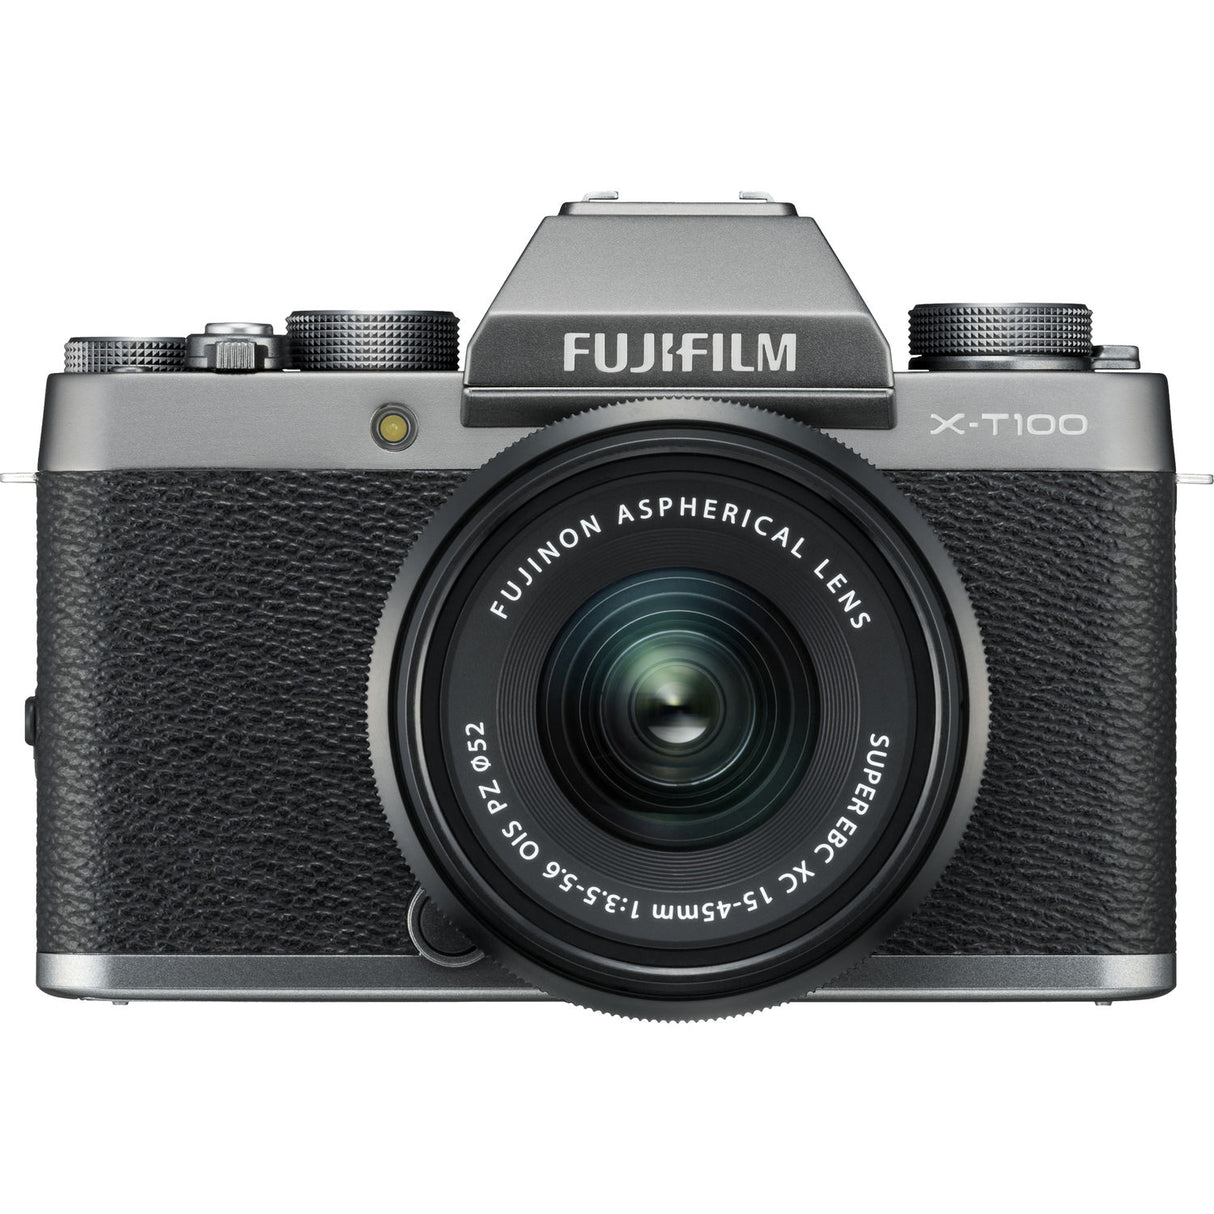 FUJIFILM X-T100 Mirrorless Digital Camera with 15-45mm Lens Dark Silver